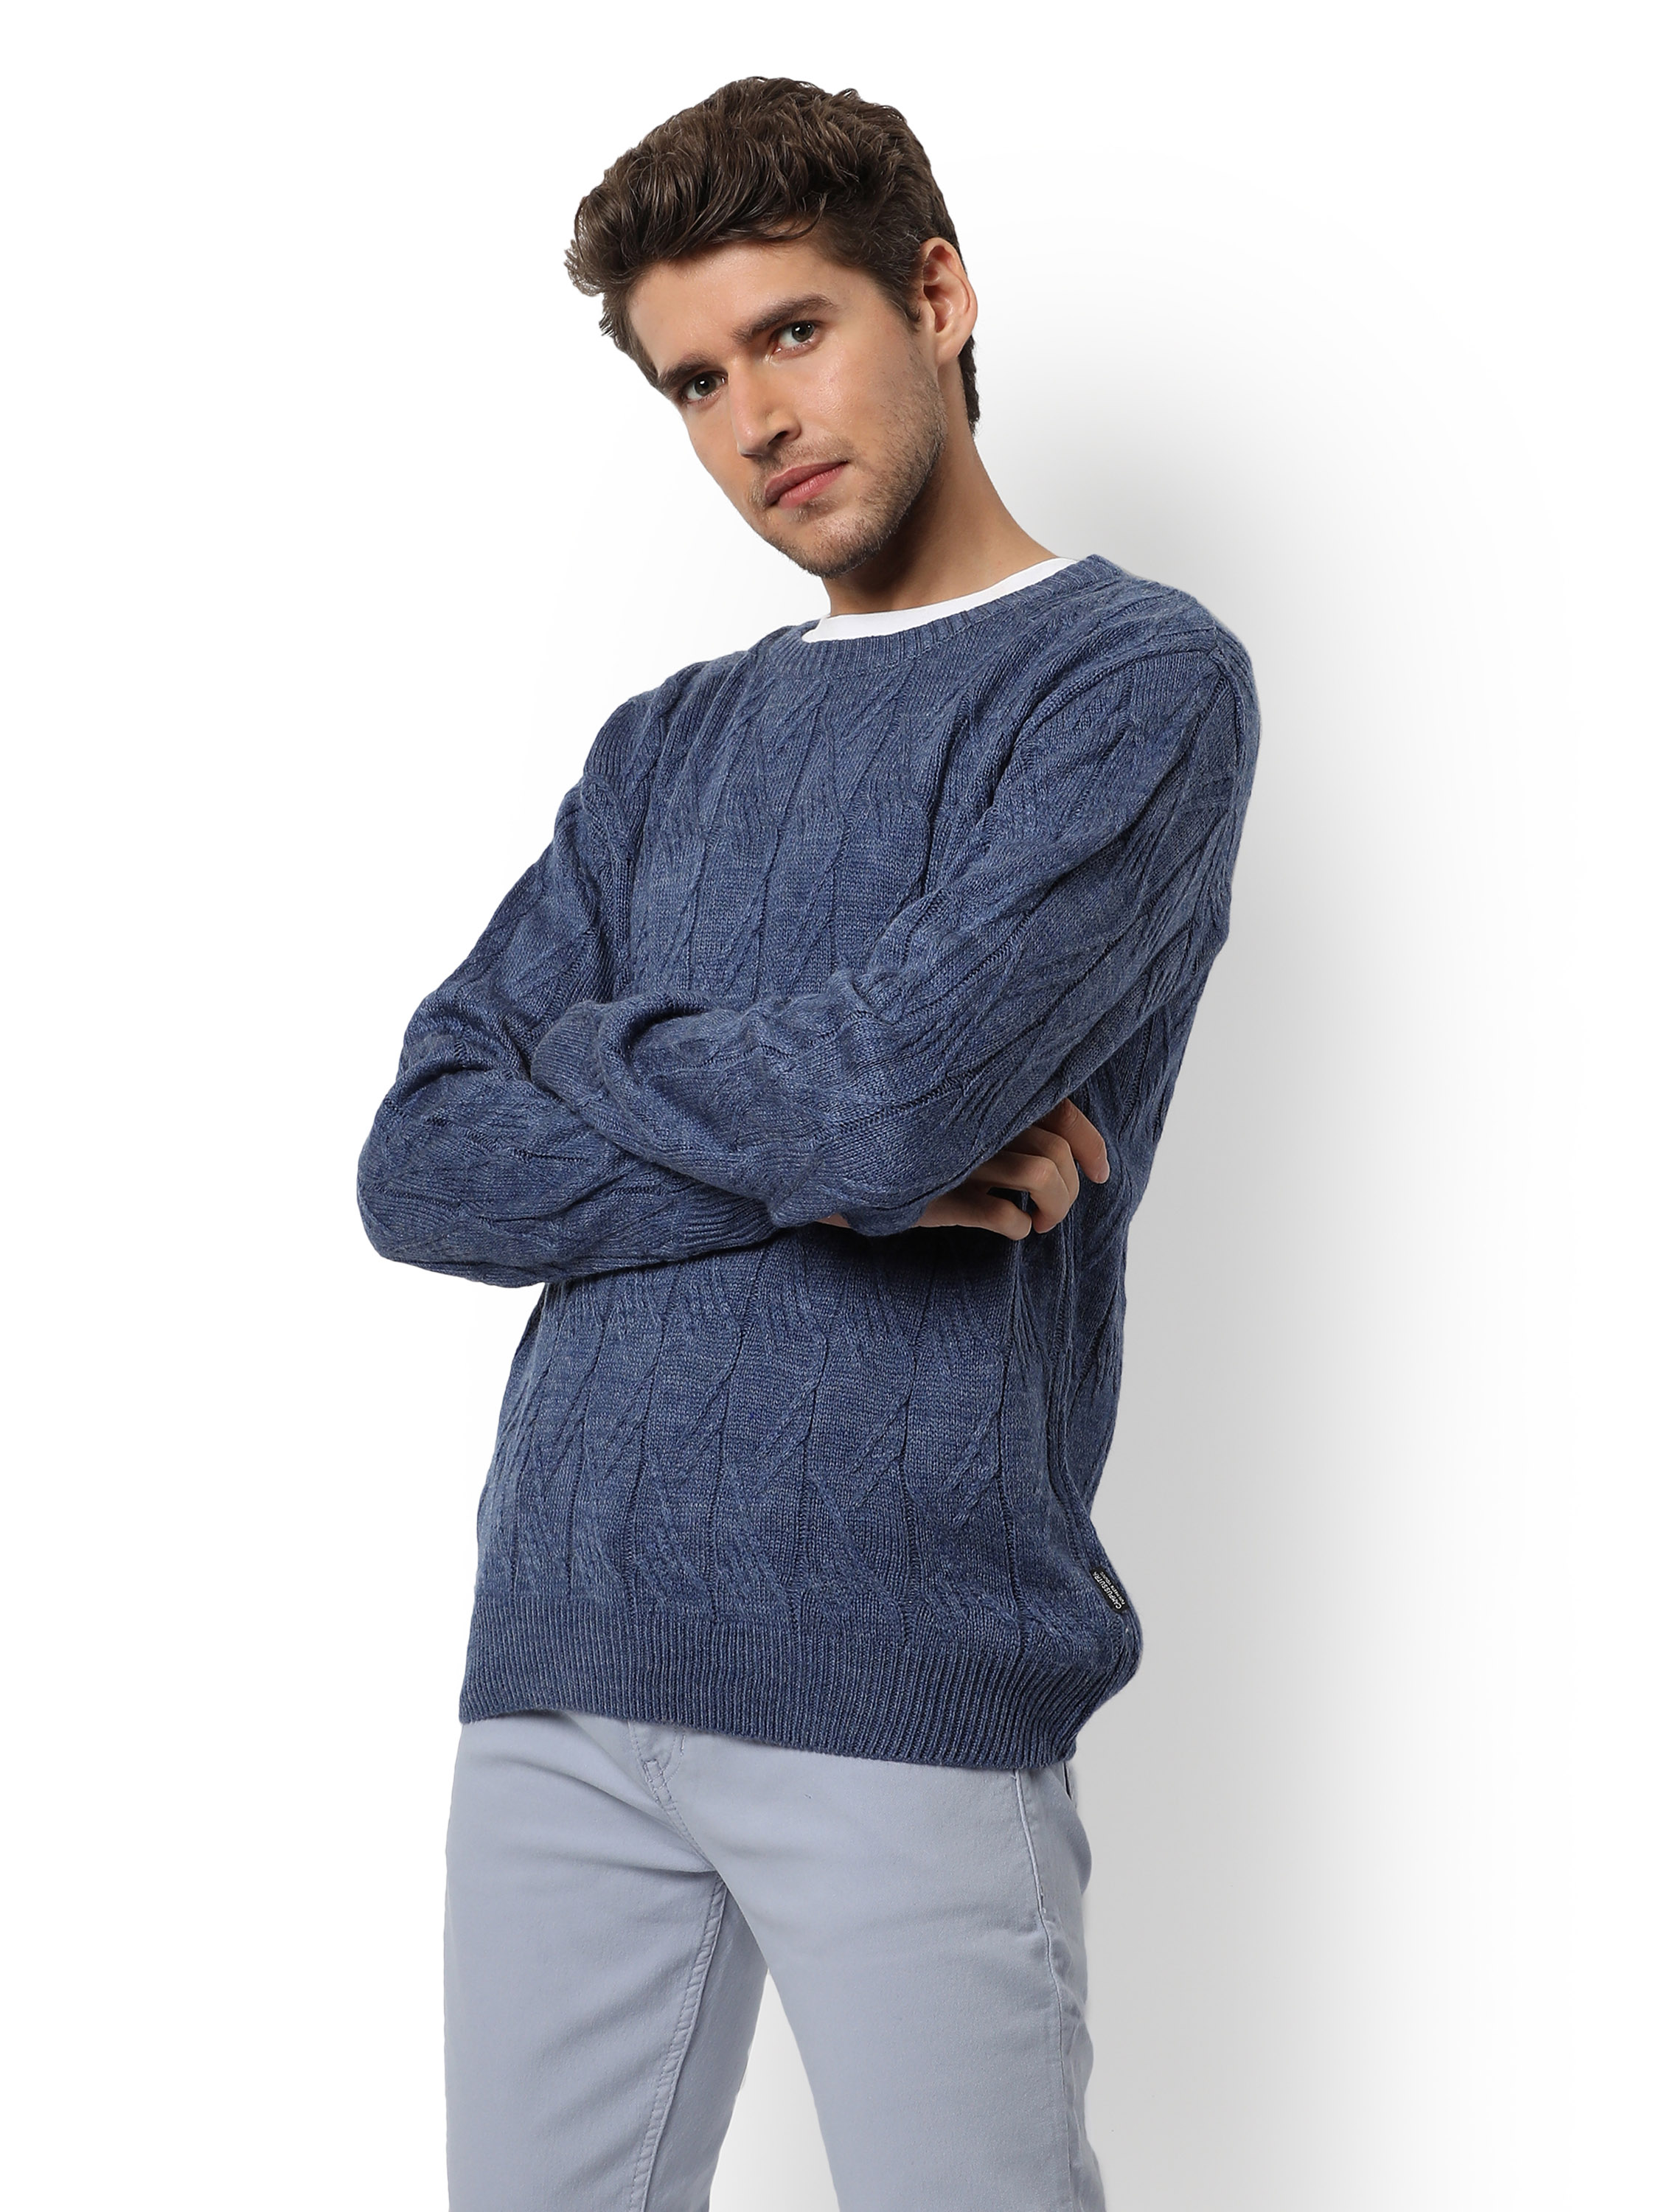 Men Solid Stylish Winter Sweater